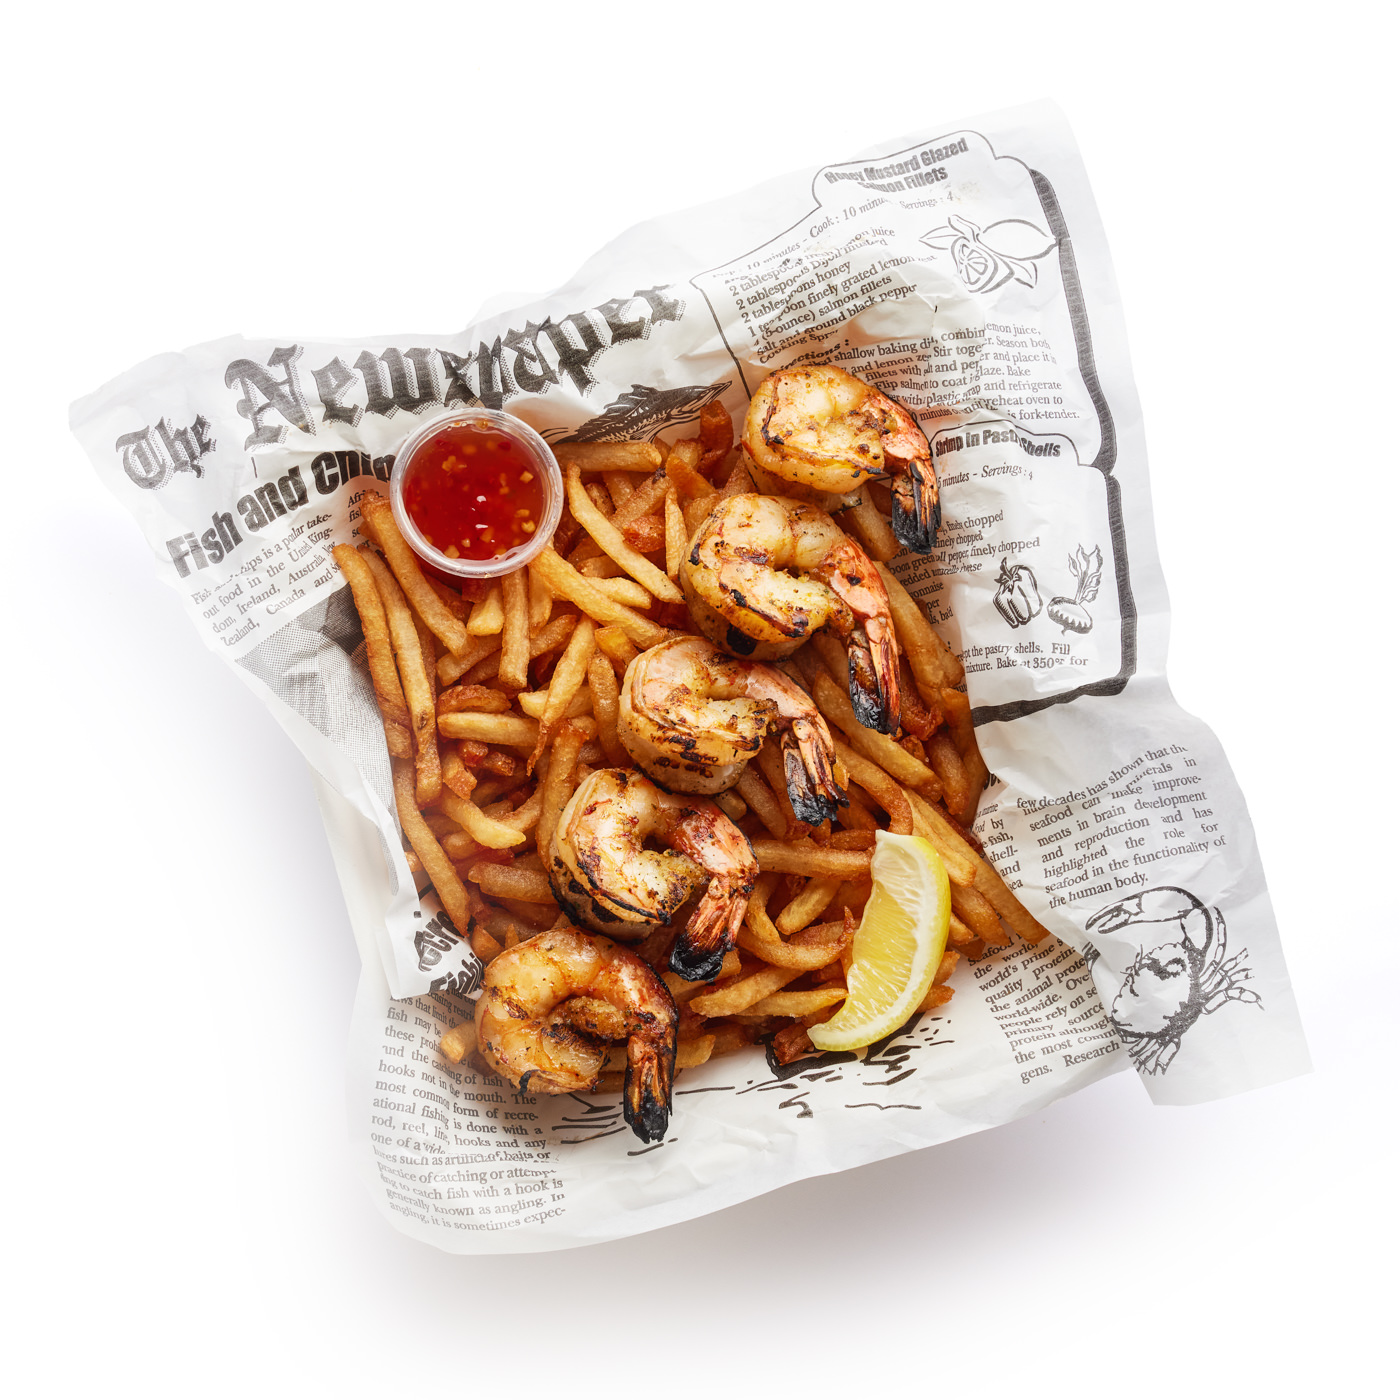 Seafood Shrimp Basket by Food Photographer